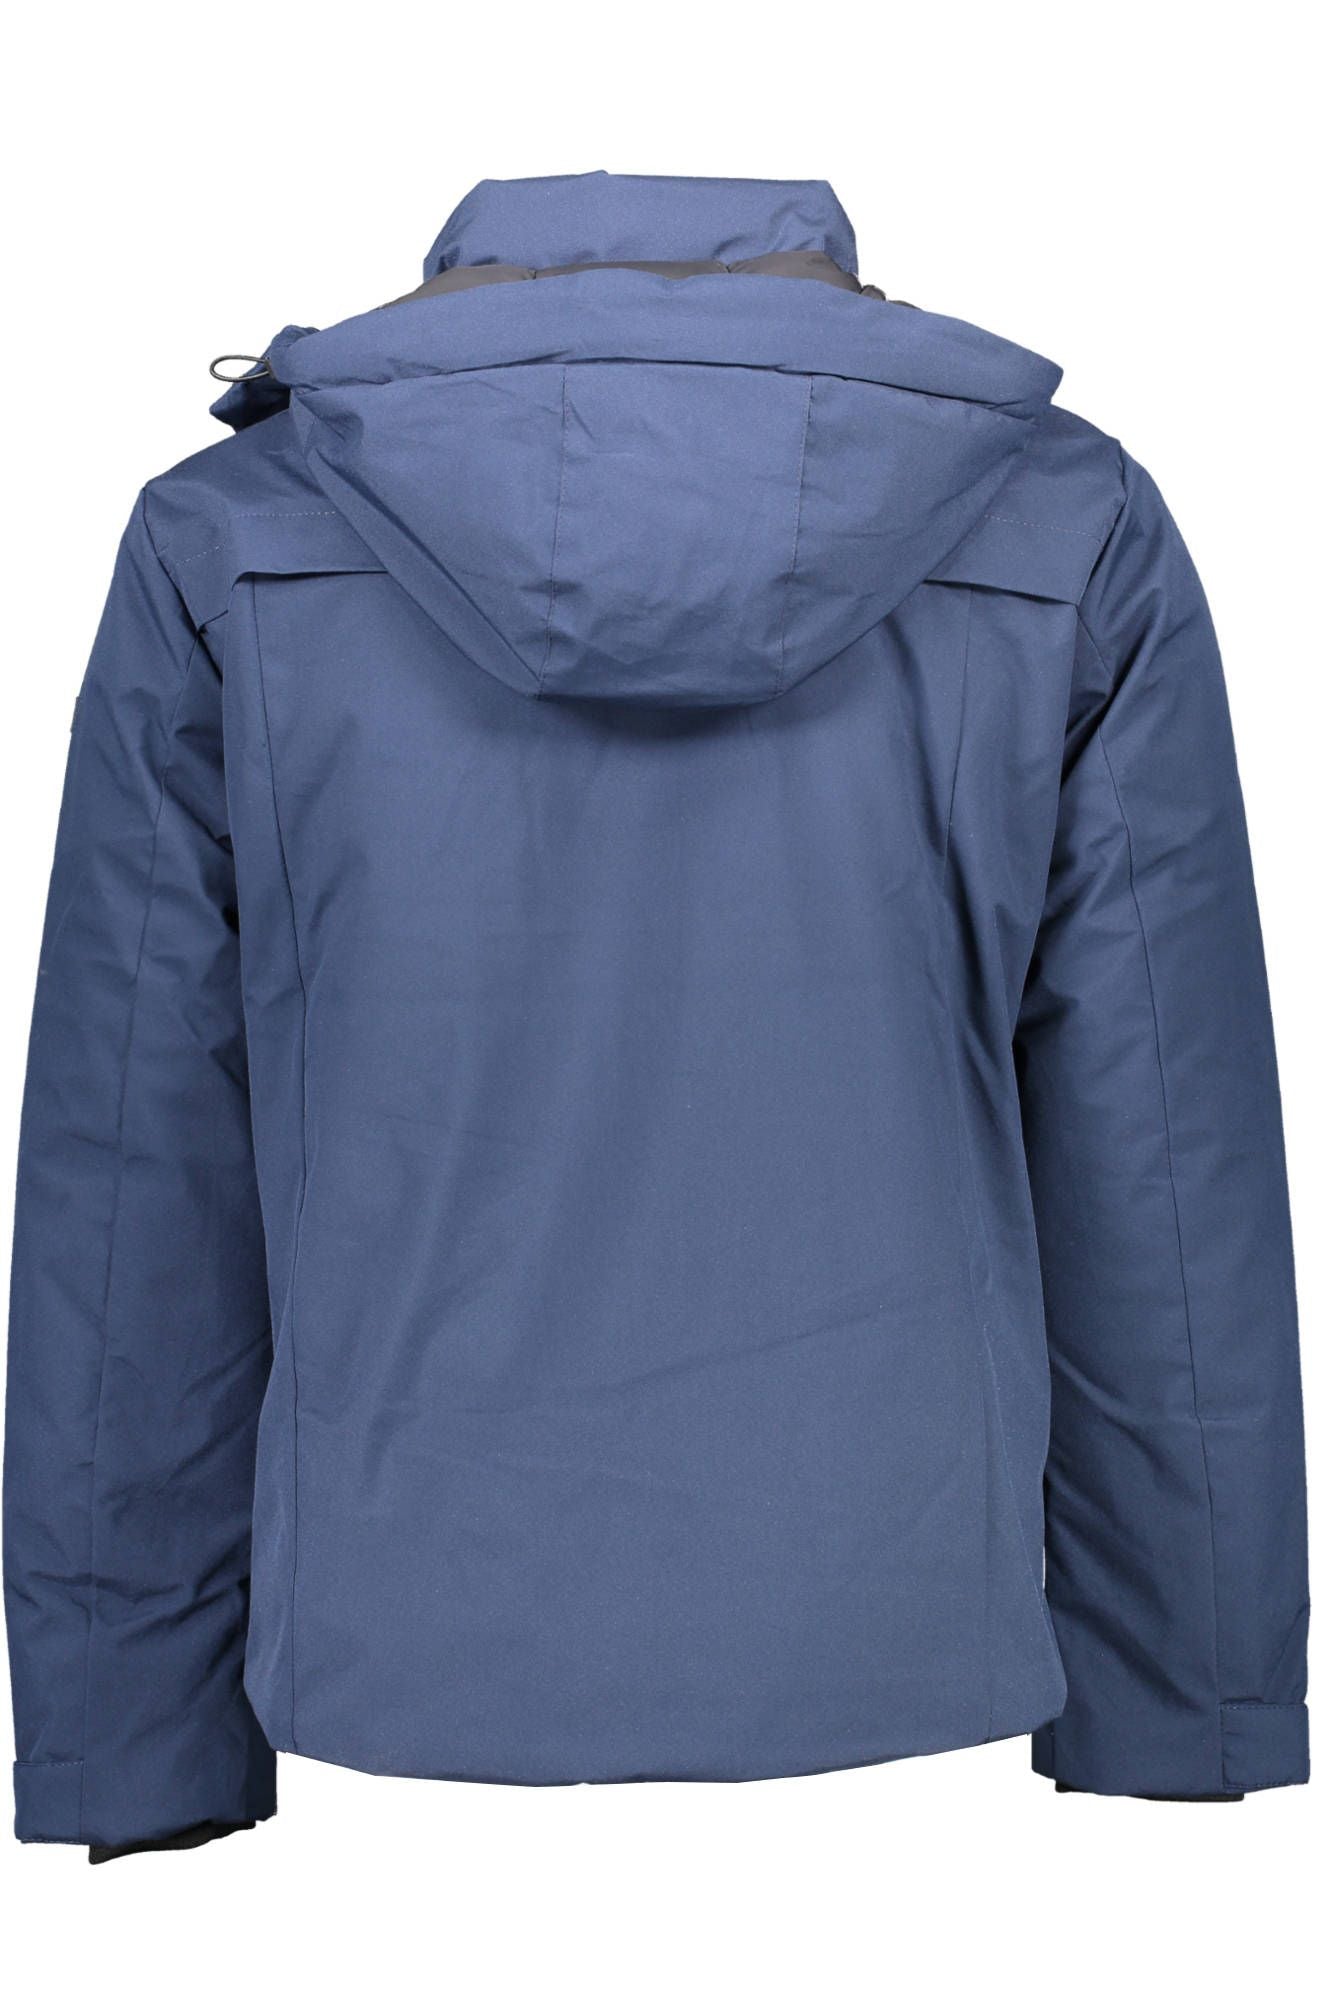 U.S. Polo Assn. Blue Polyester Jacket